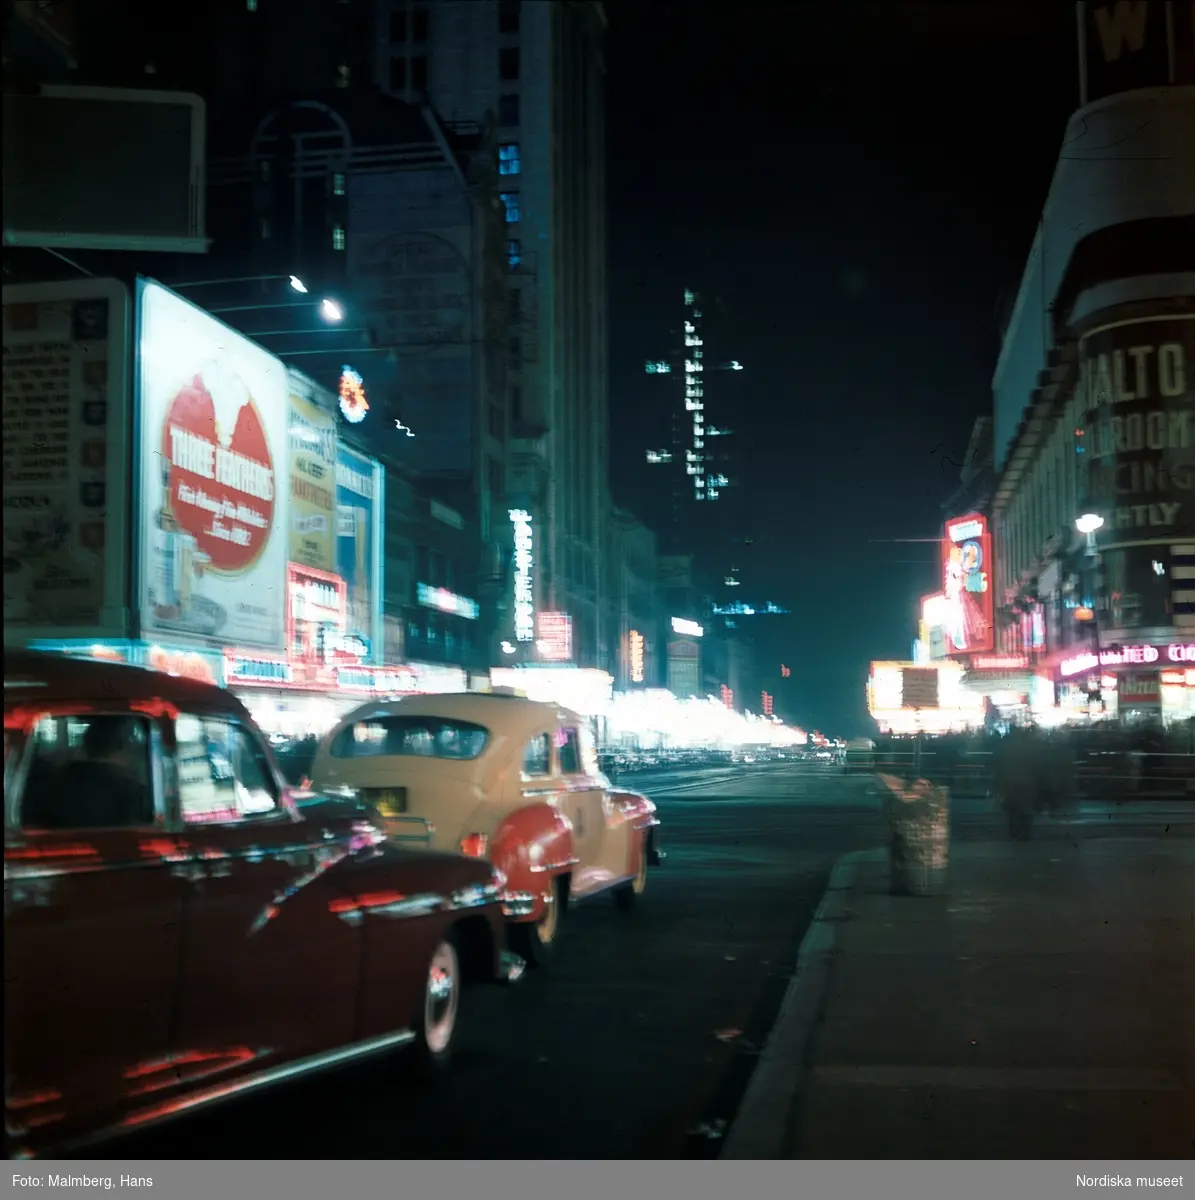 New York, USA. Biltrafik på gata i kvällsbelysning. Neonskyltar, reklam.